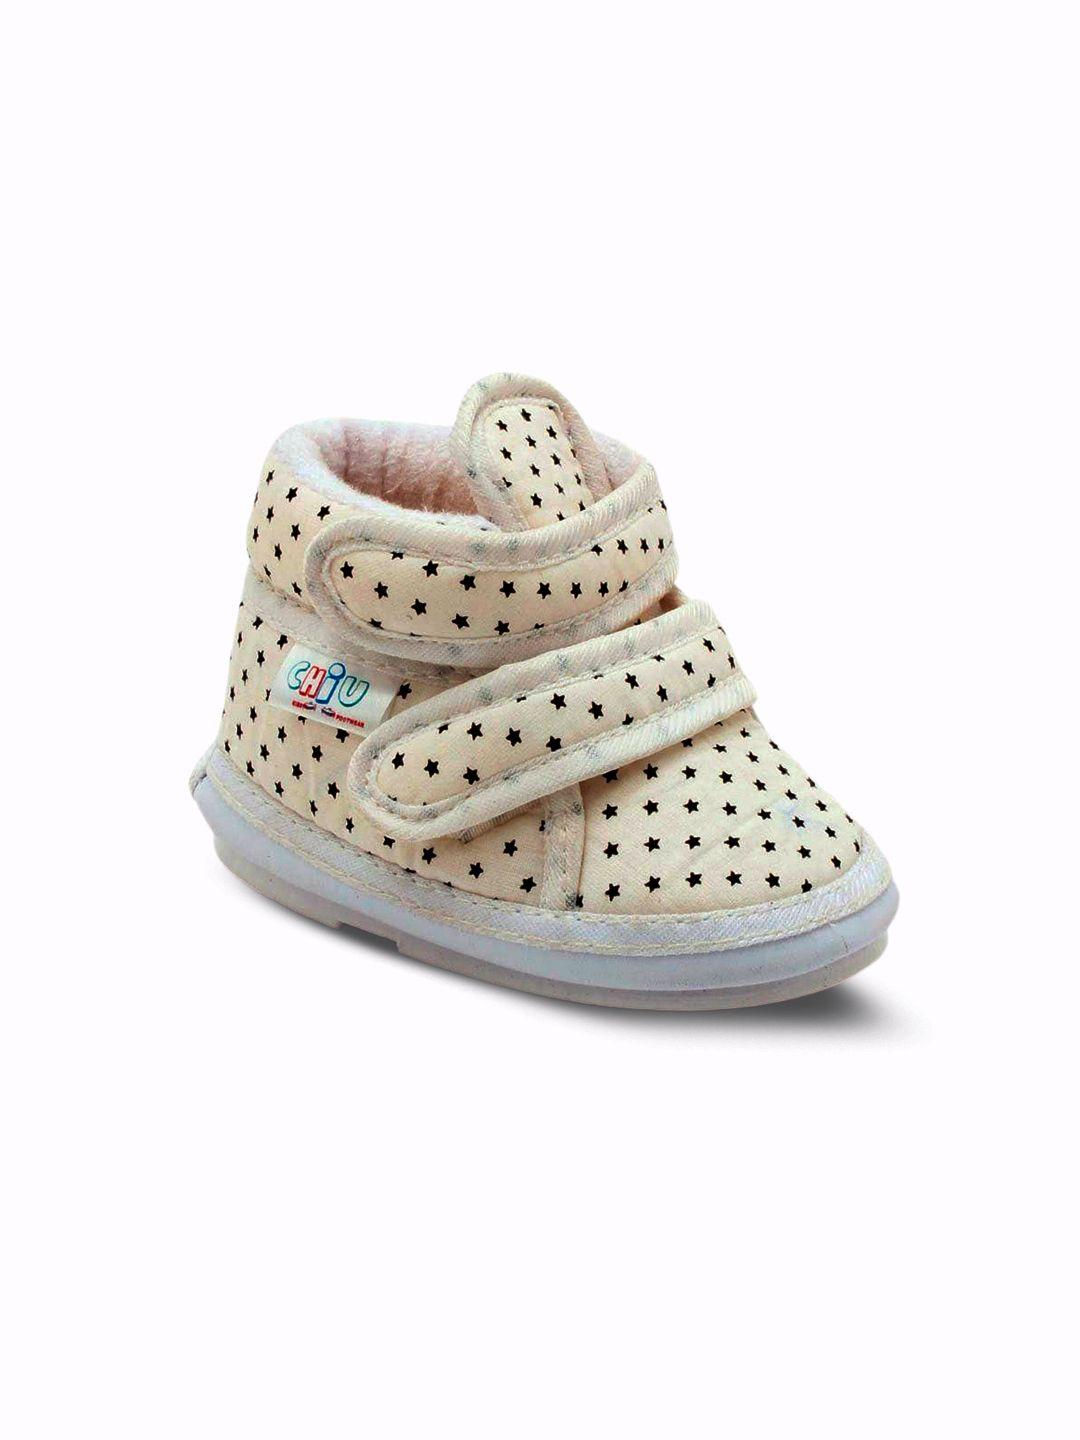 chiu infants kids mid top printed comfort insole lightweight slip-on sneakers